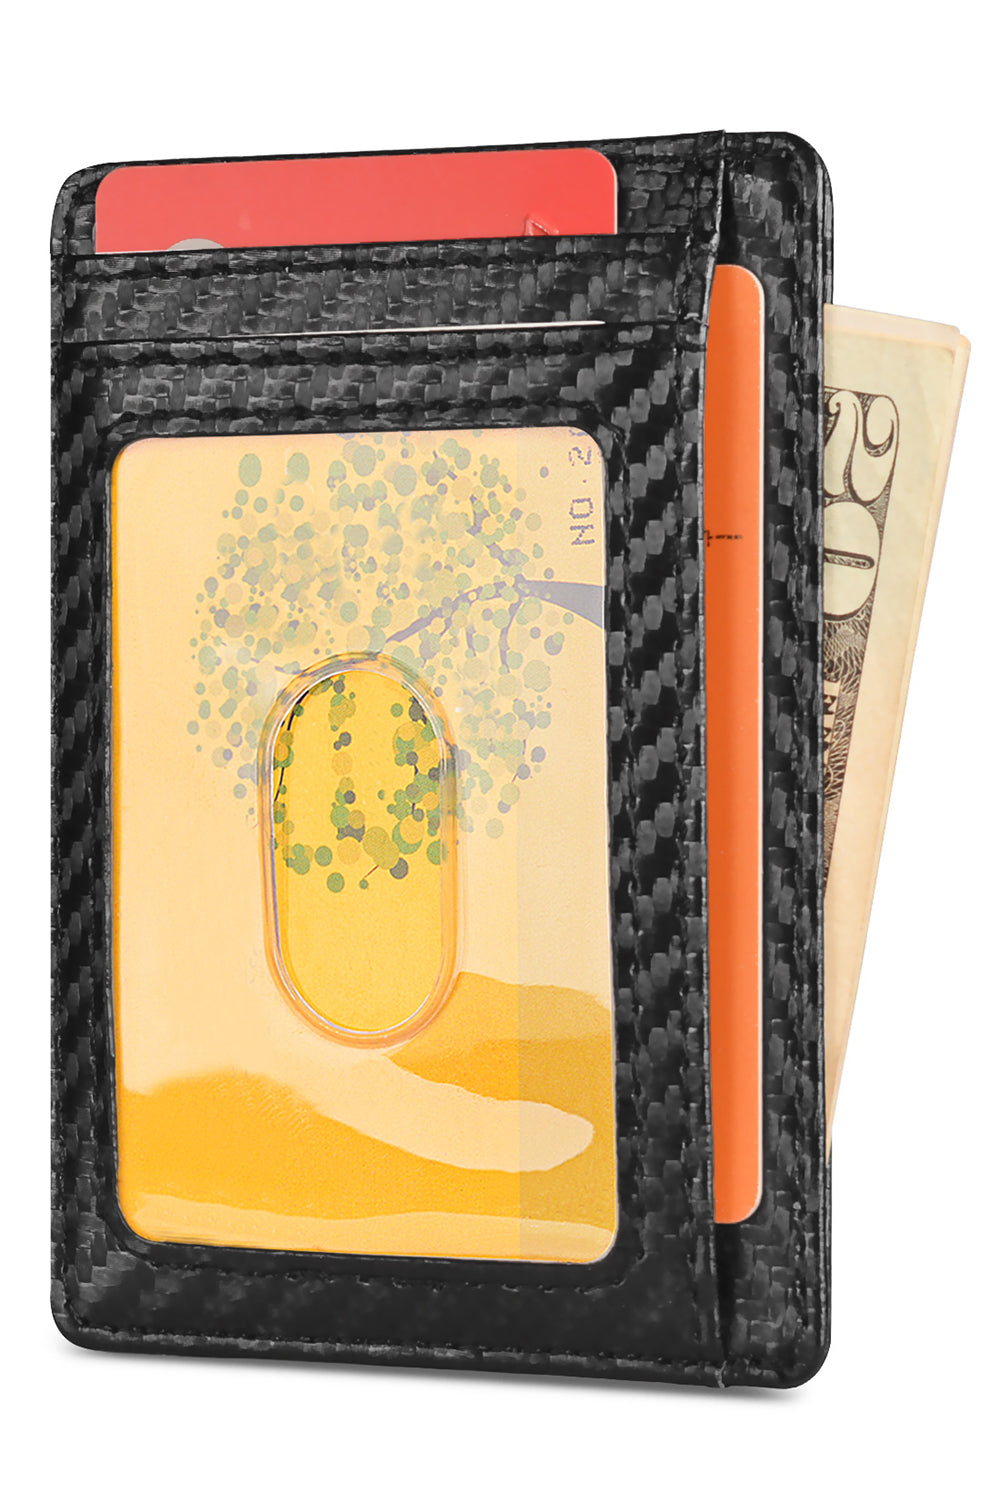 Buffway Slim Minimalist Front Pocket RFID Blocking Leather Wallets for Men and Women - Carbon Fiber Black